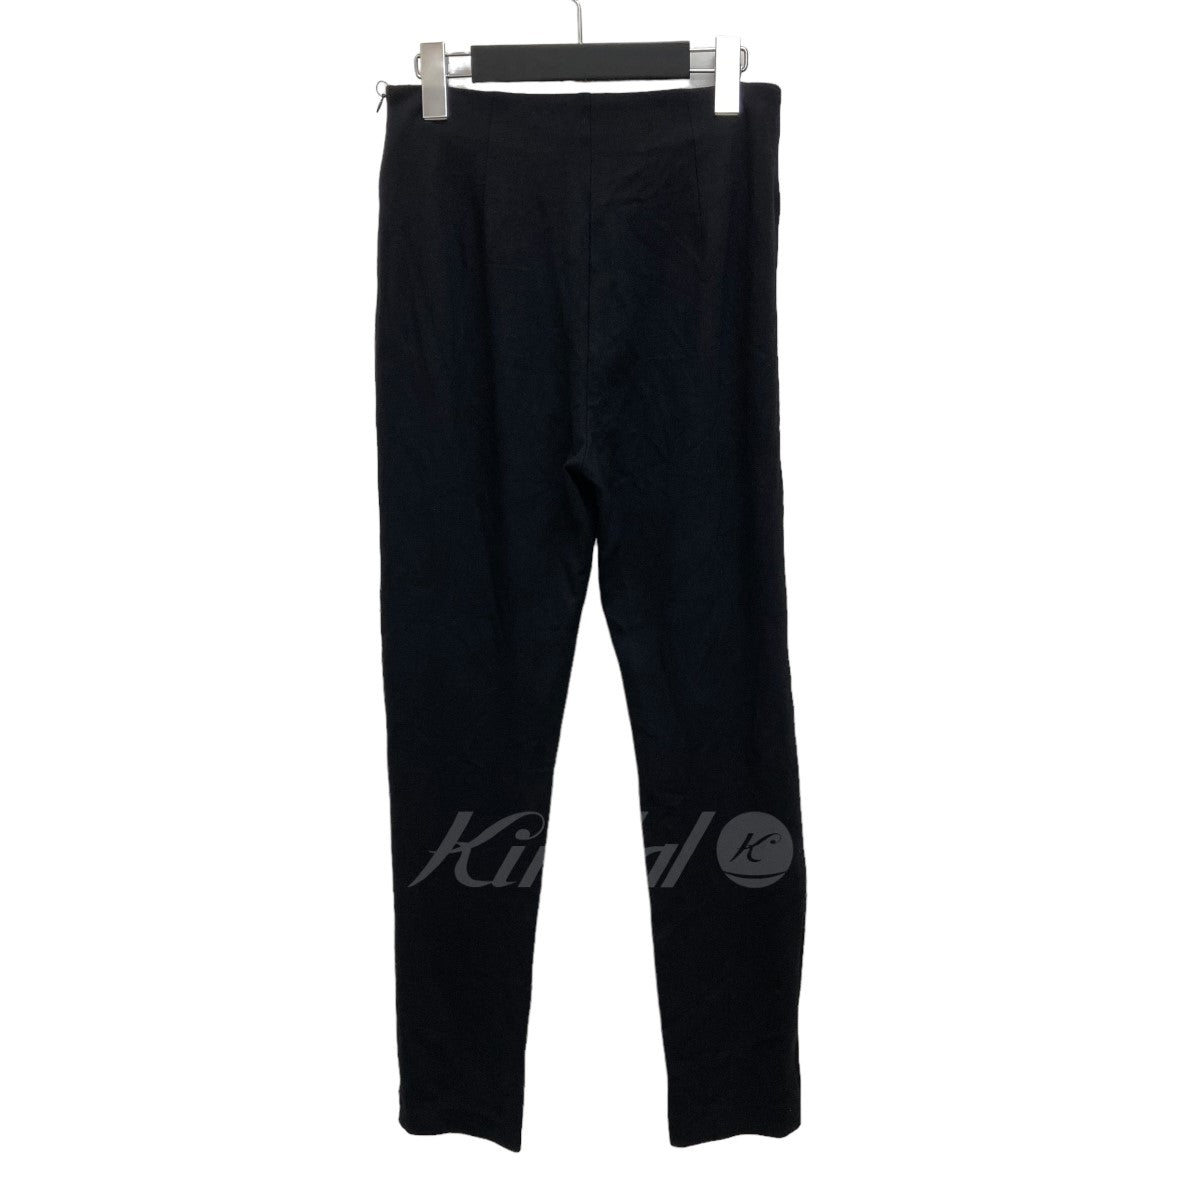 yo BIOTOP(ビオトープ) Tiny Pants パンツ EES-41020-C ブラック ...